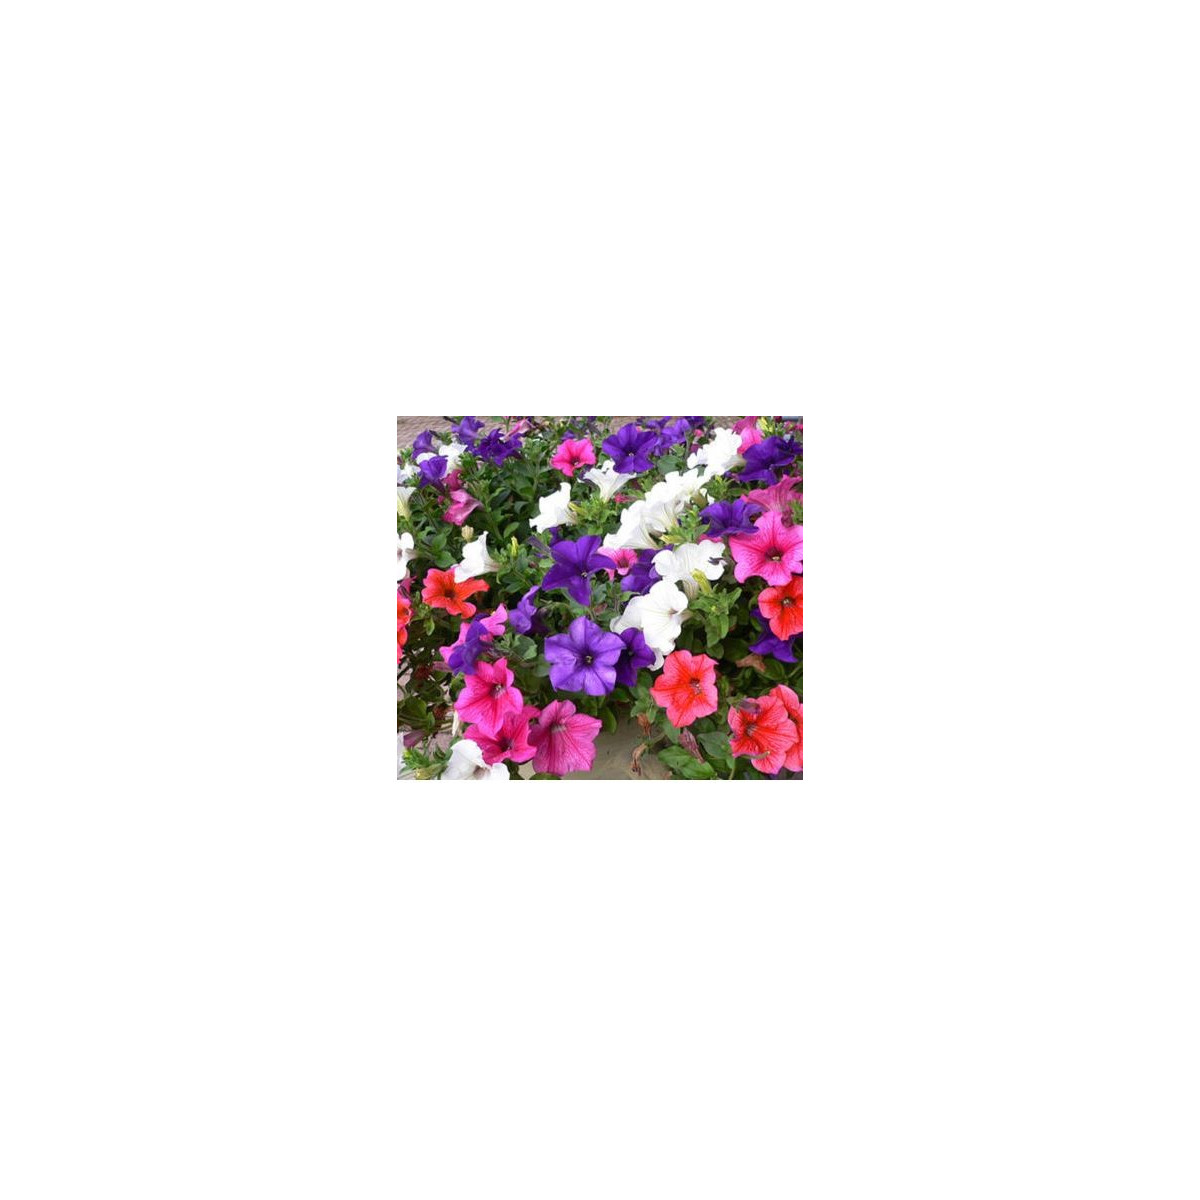 Petúnie velkokvětá převislá mix barev - Petunia hybrida pendula - semena petúnie - 0,05 g